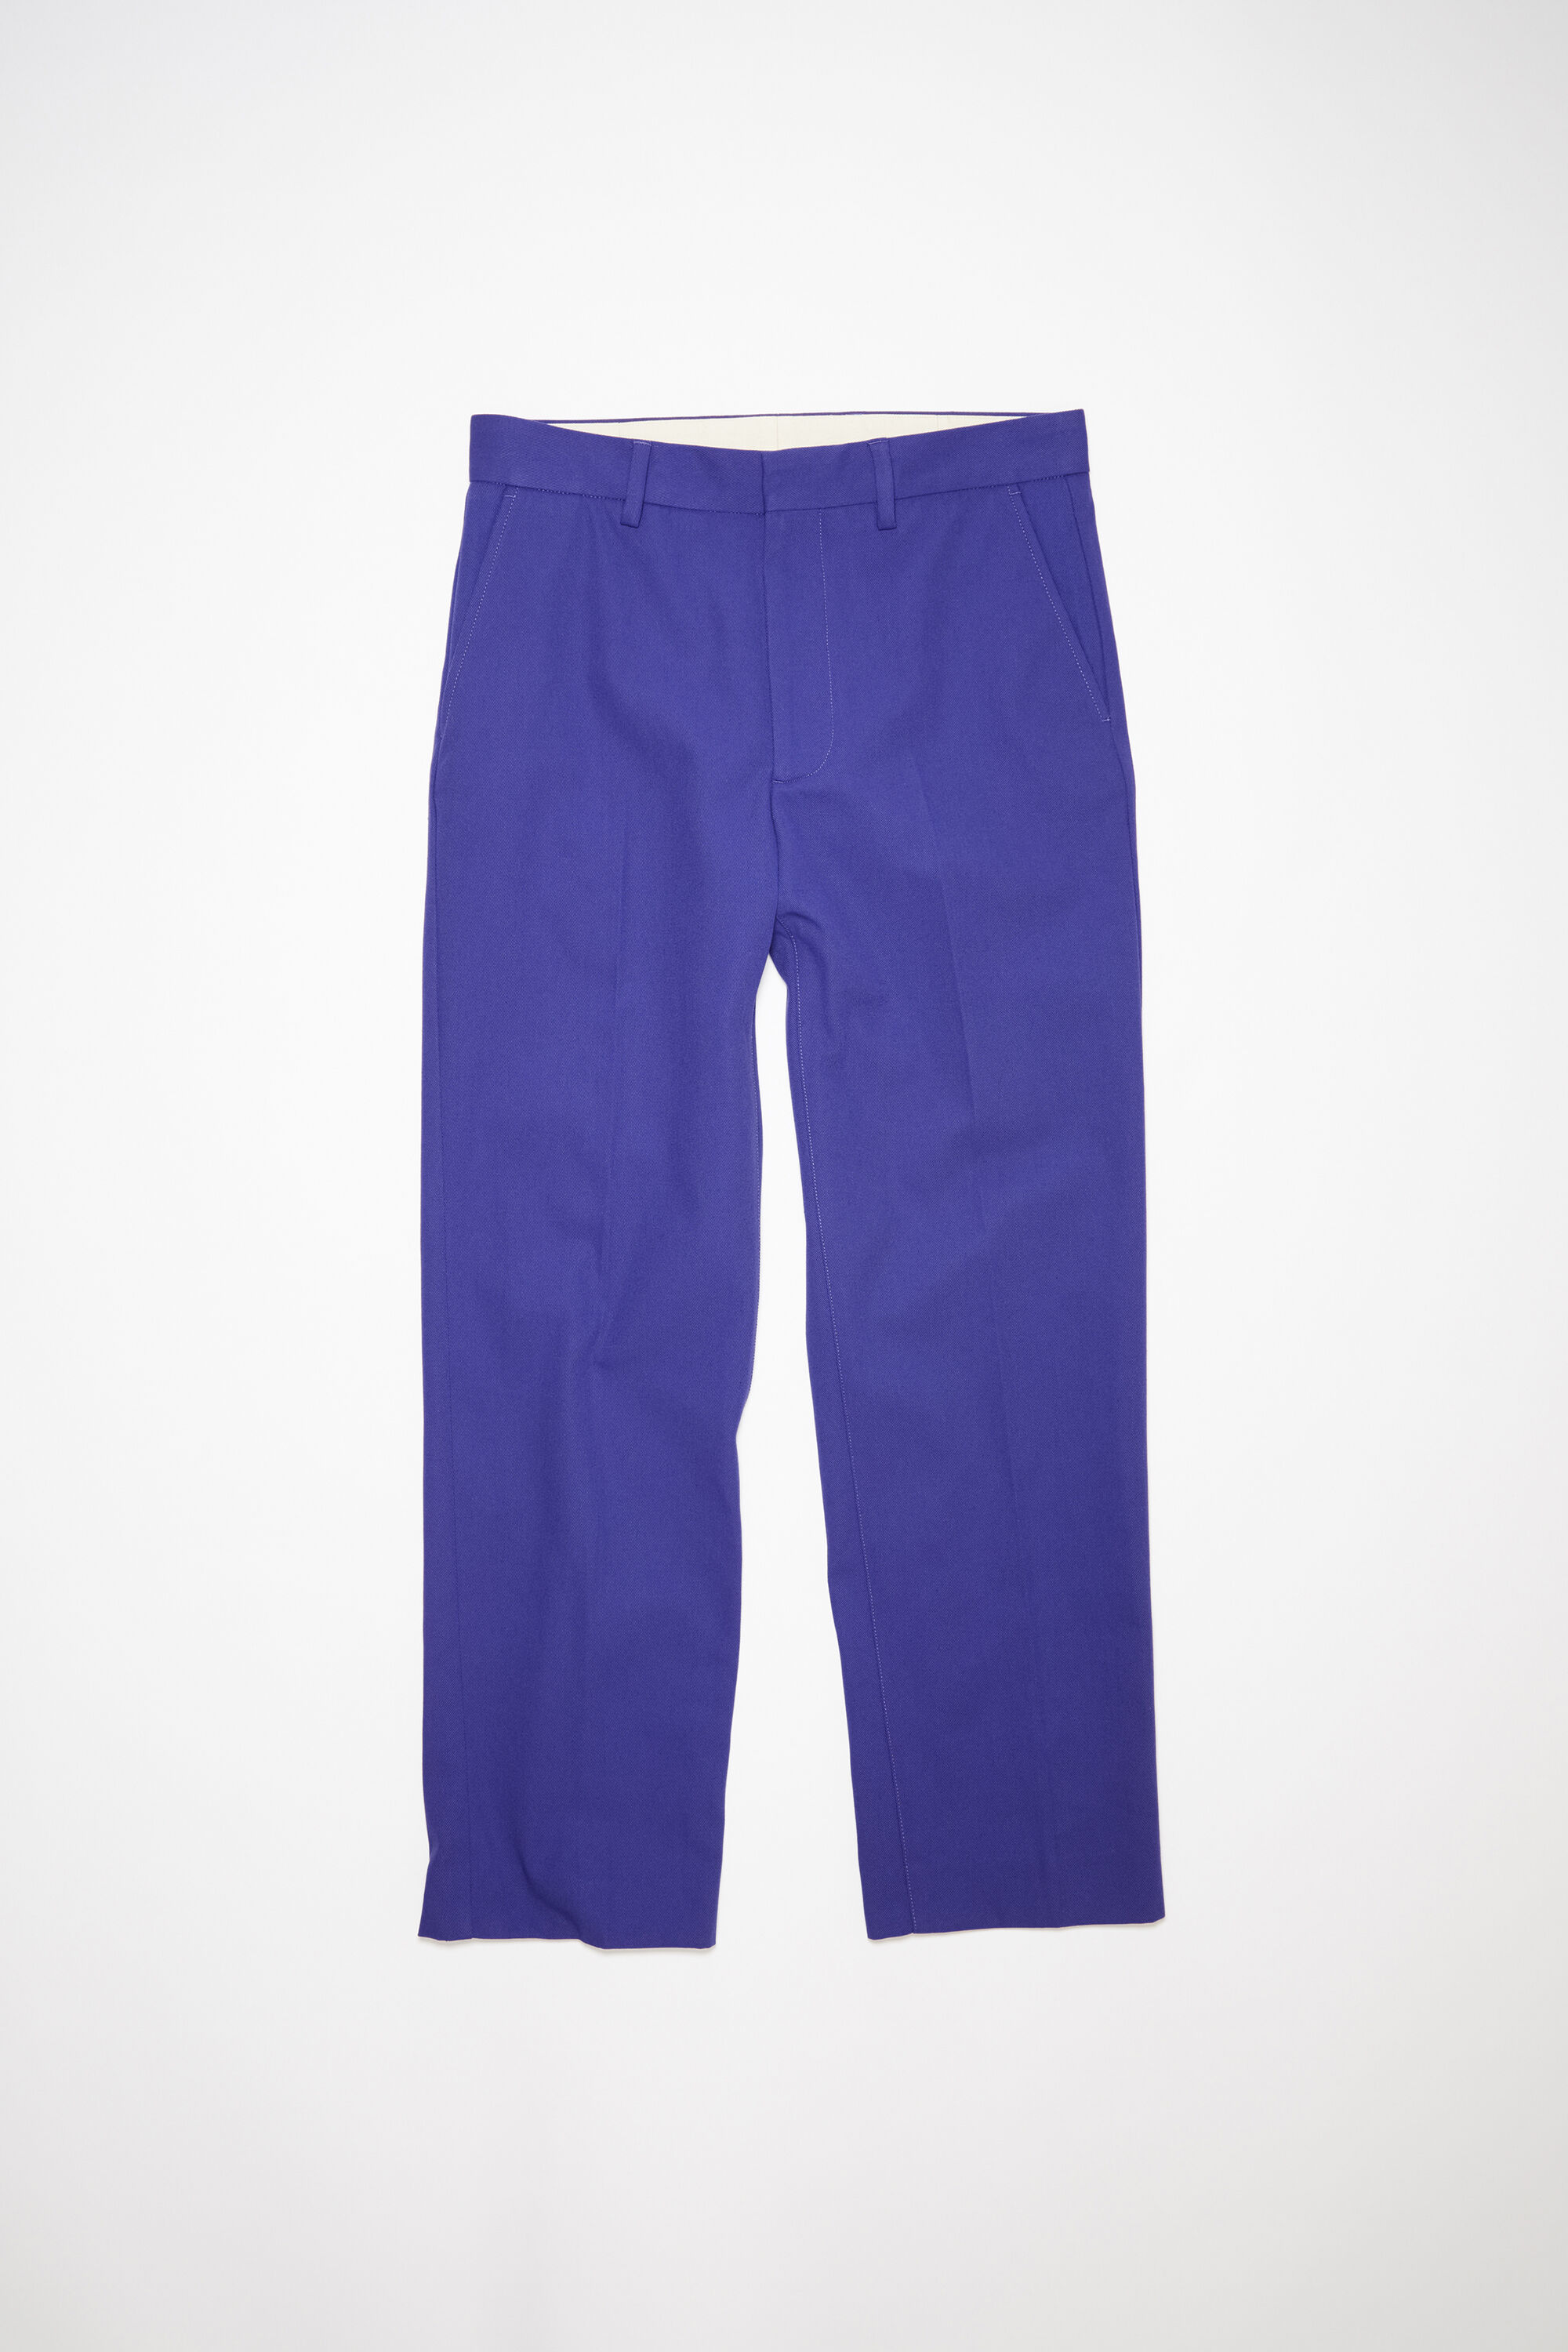 Acne Studios - Twill cotton-blend trousers - Electric purple